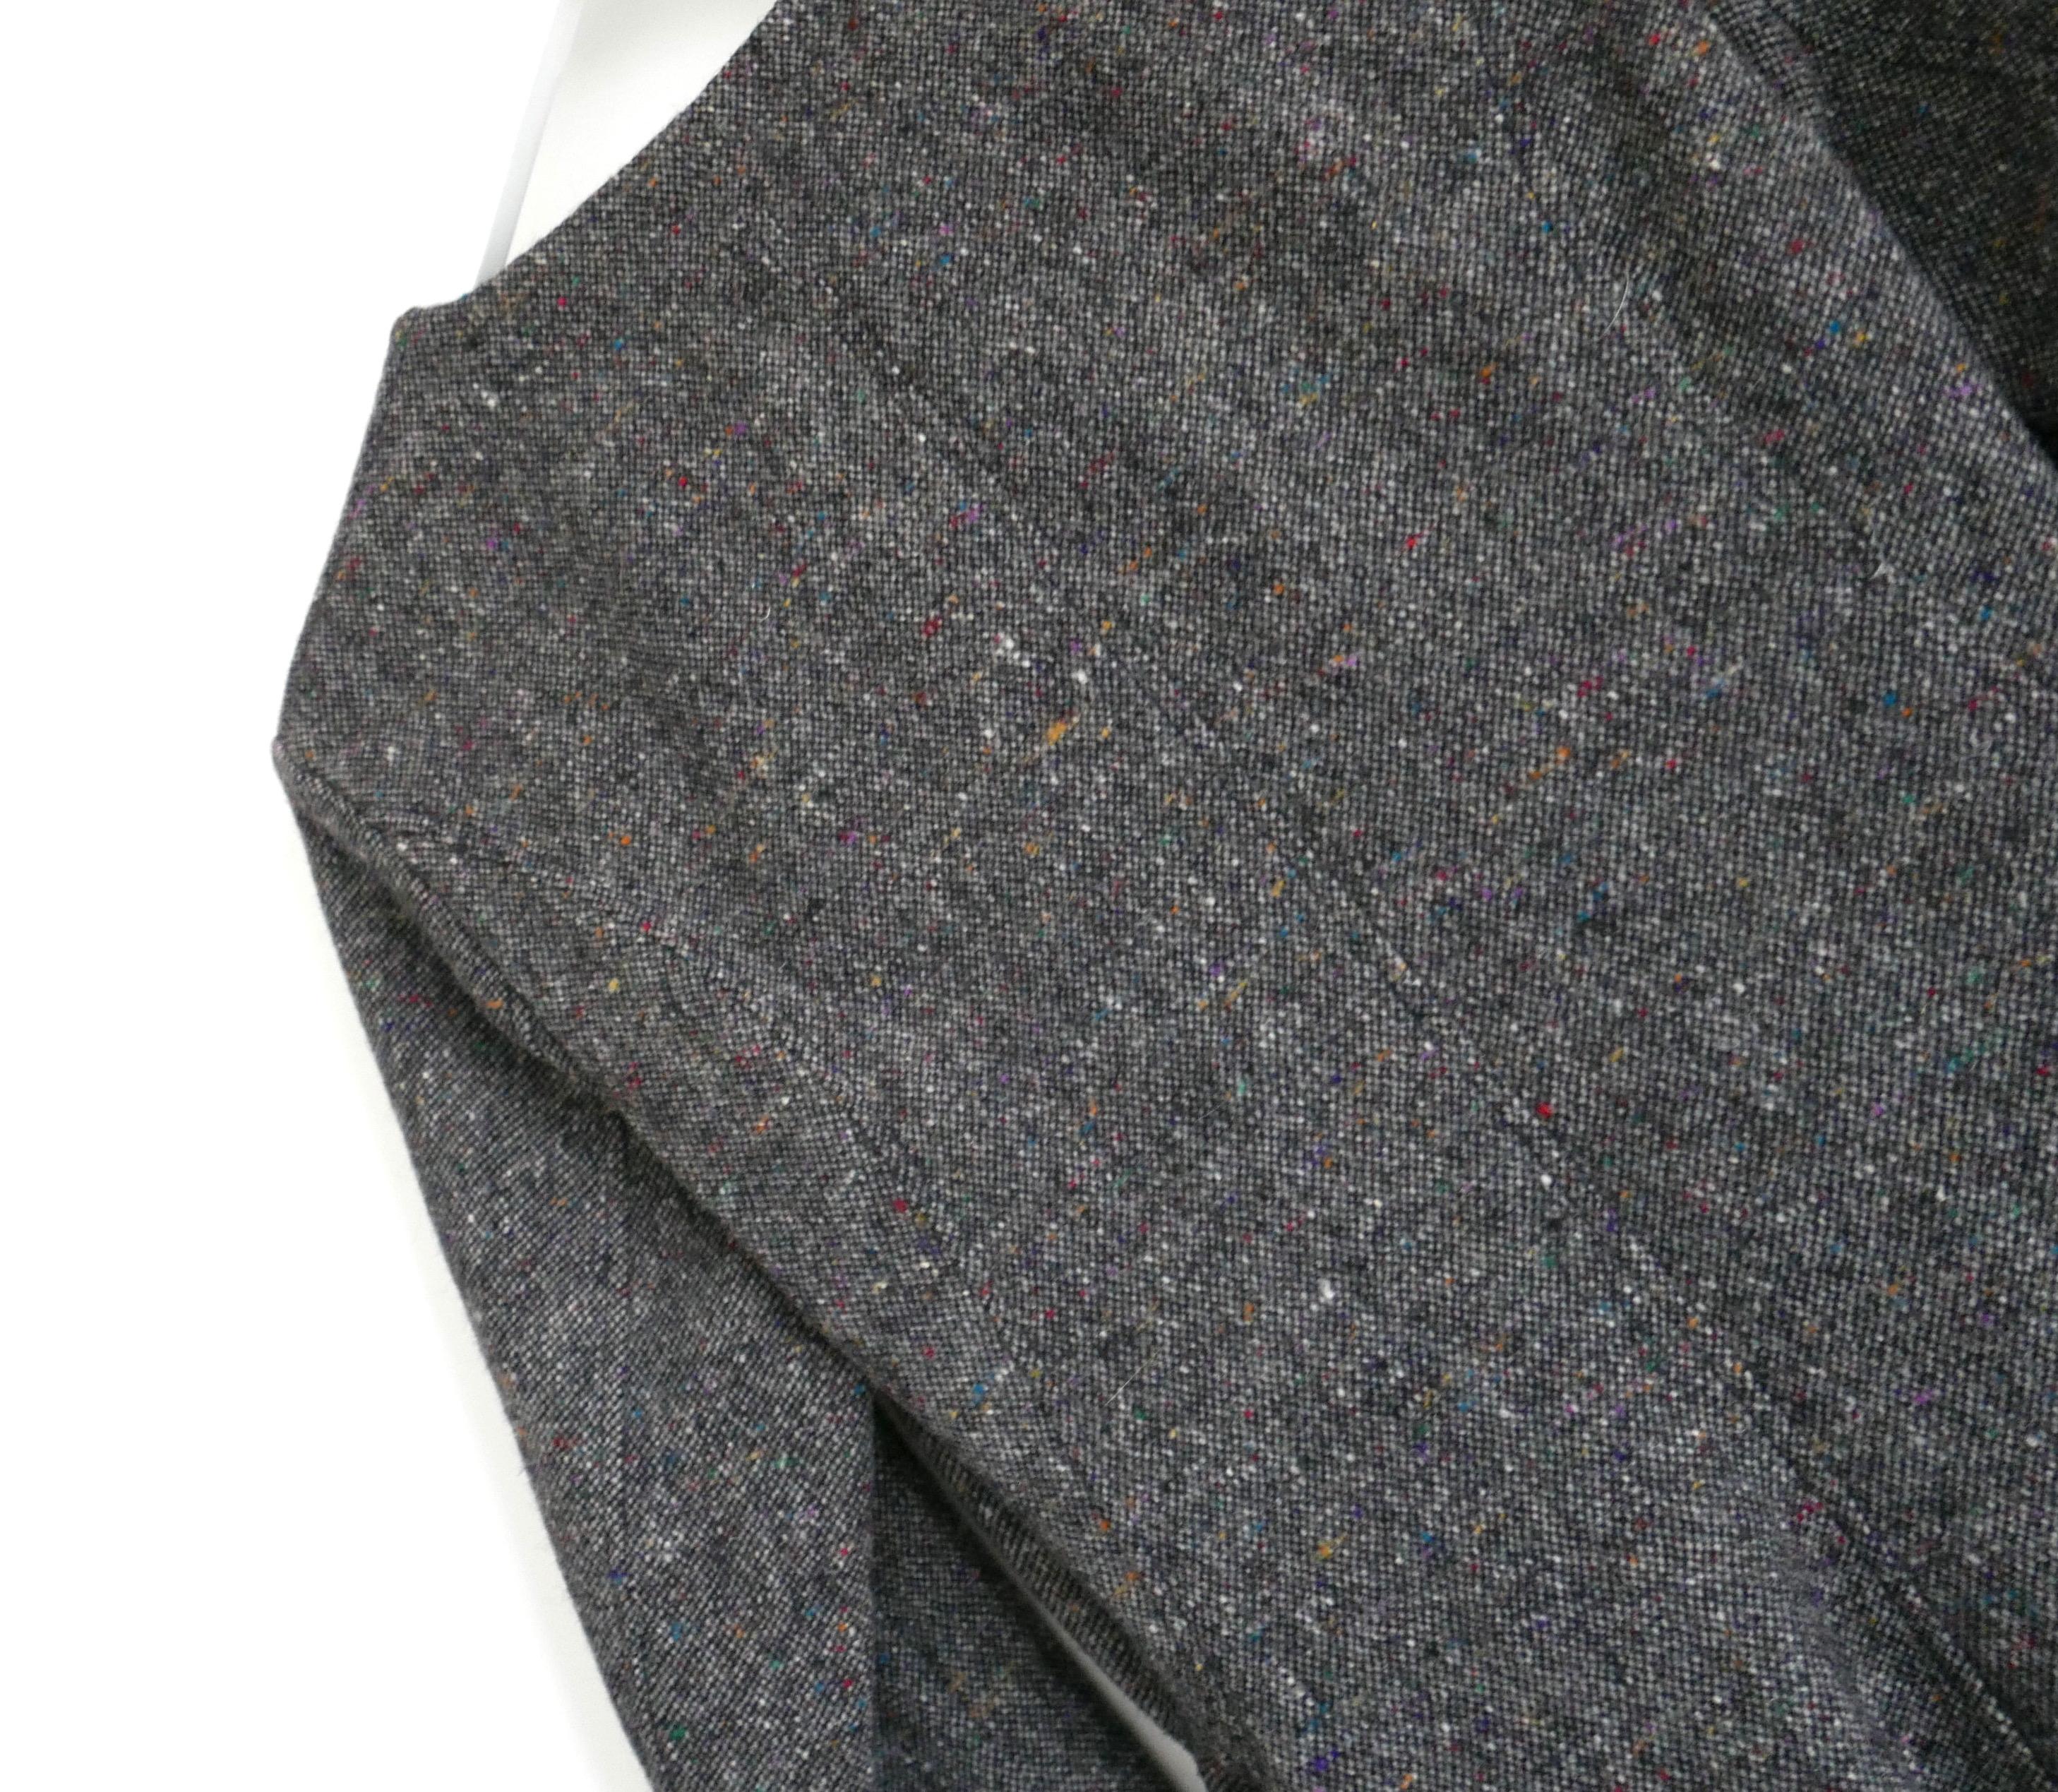 Yves Saint Laurent x Stefano Pilati AW08 Tweed Tailcoat Jacket Coat For Sale 4